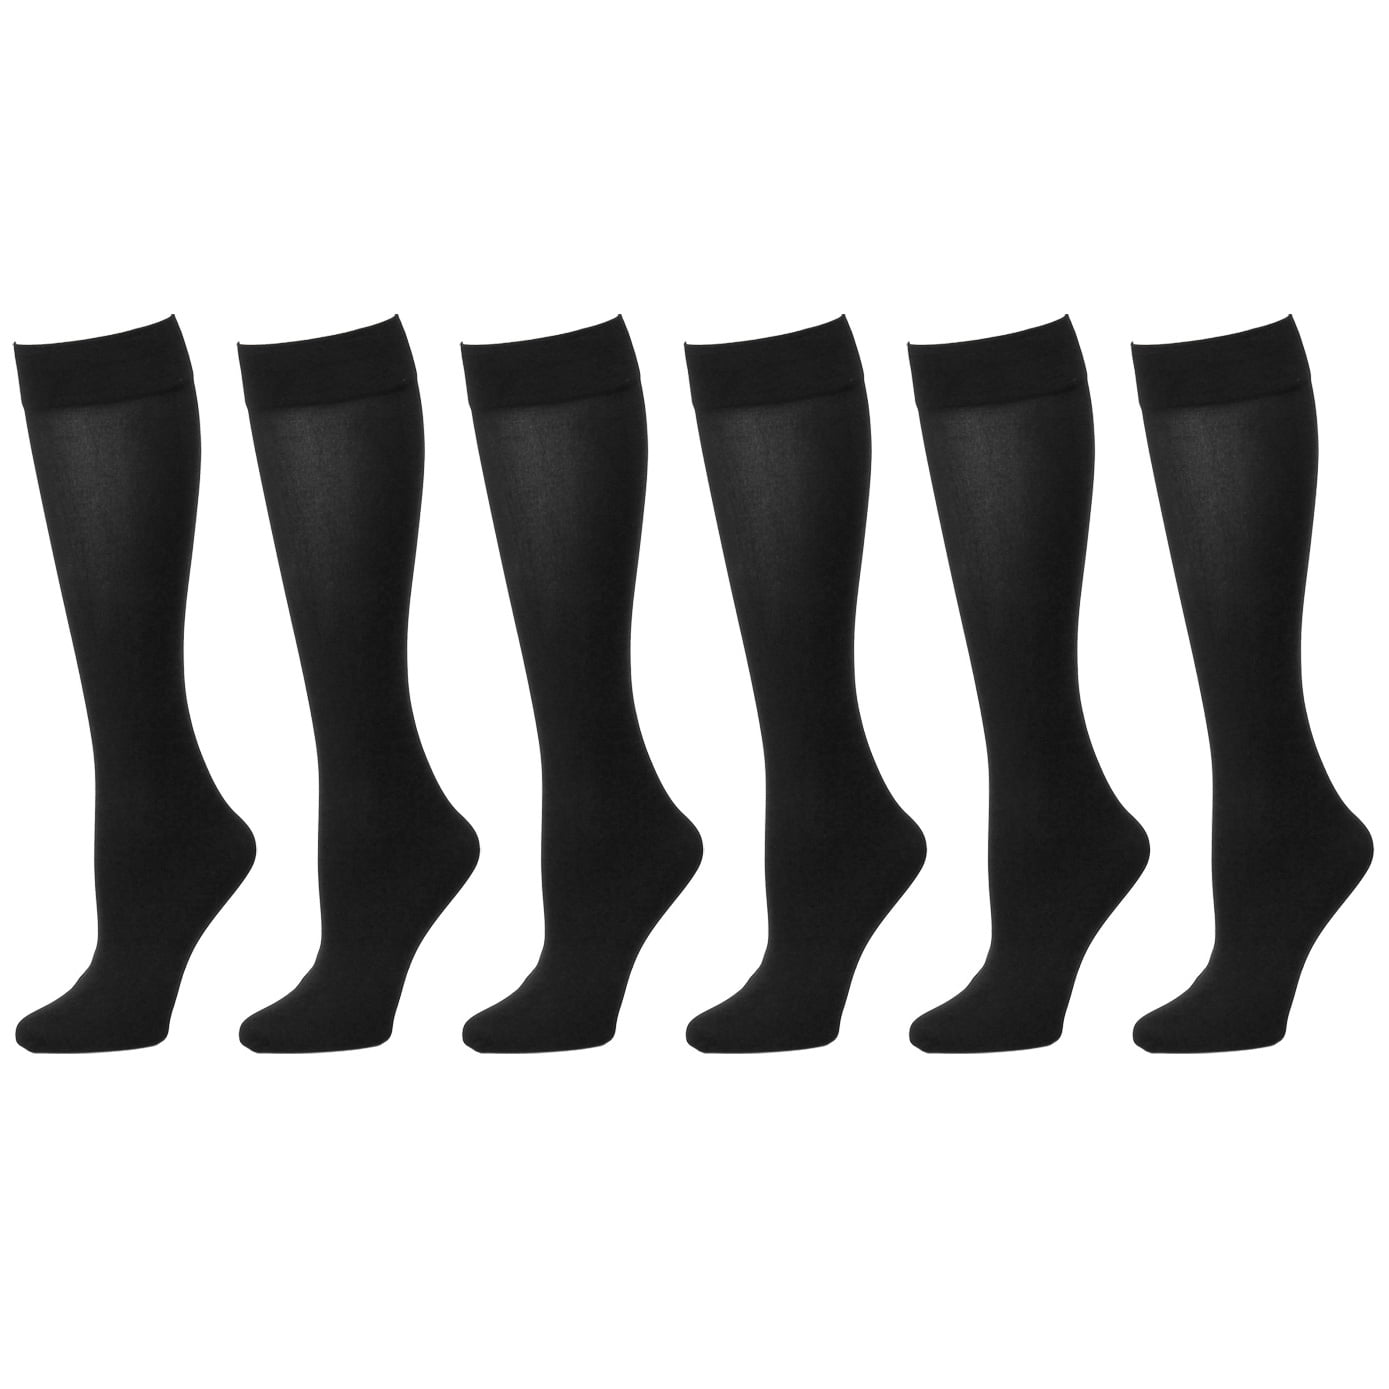 3 Pairs Women's Ladies Black Knee High Diamond Pattern Pop Socks One size P1A 